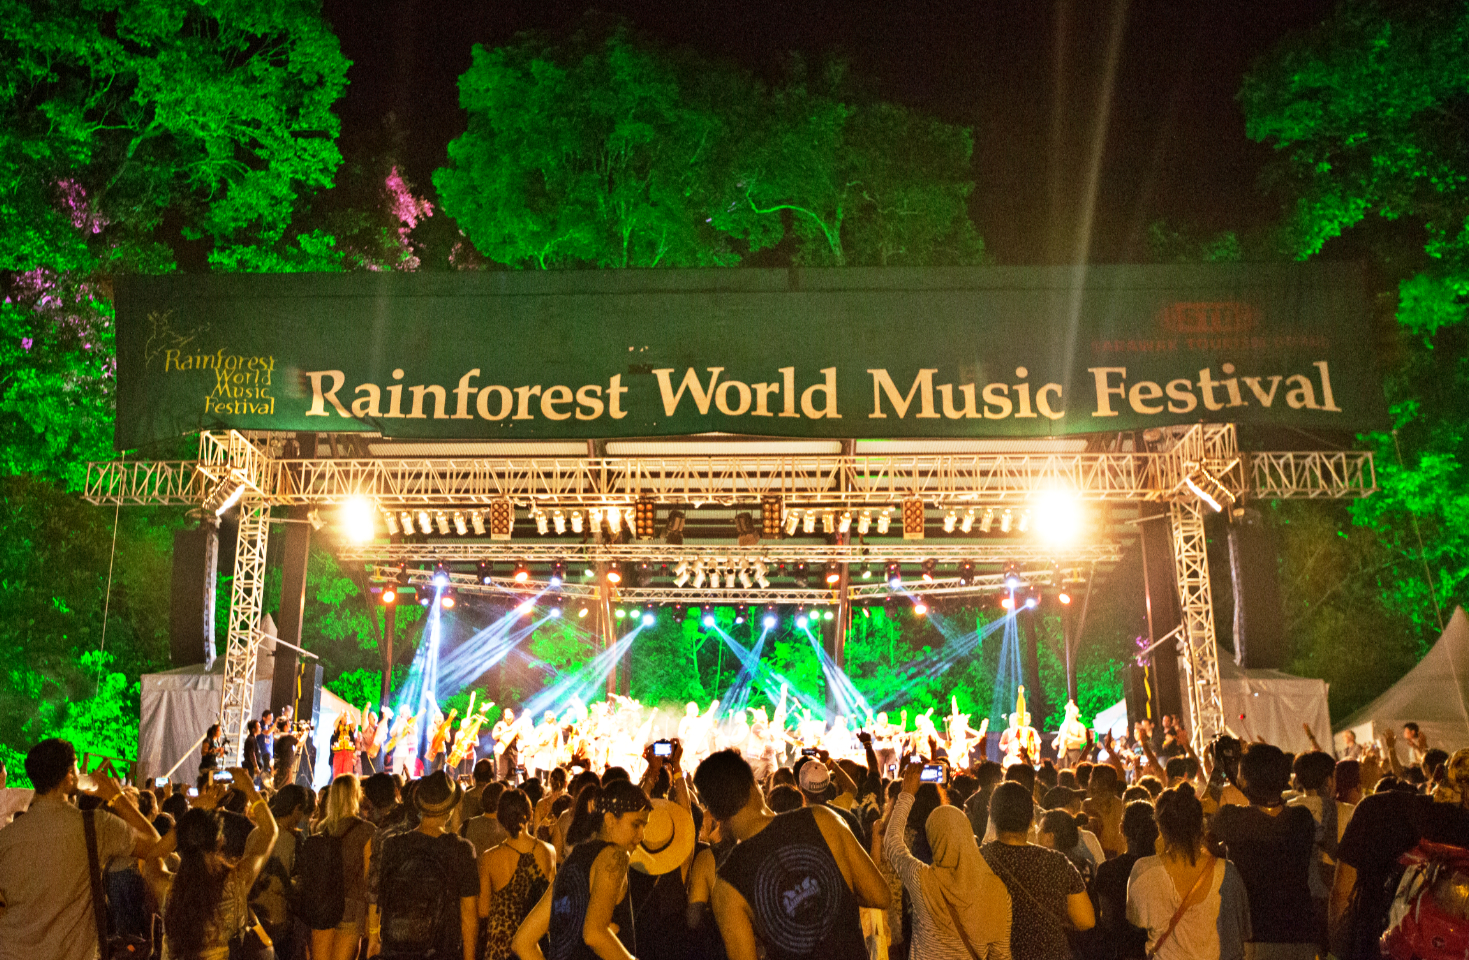 Rainforest World Music Festival 2016, Sarawak Cultural Village, Kuching